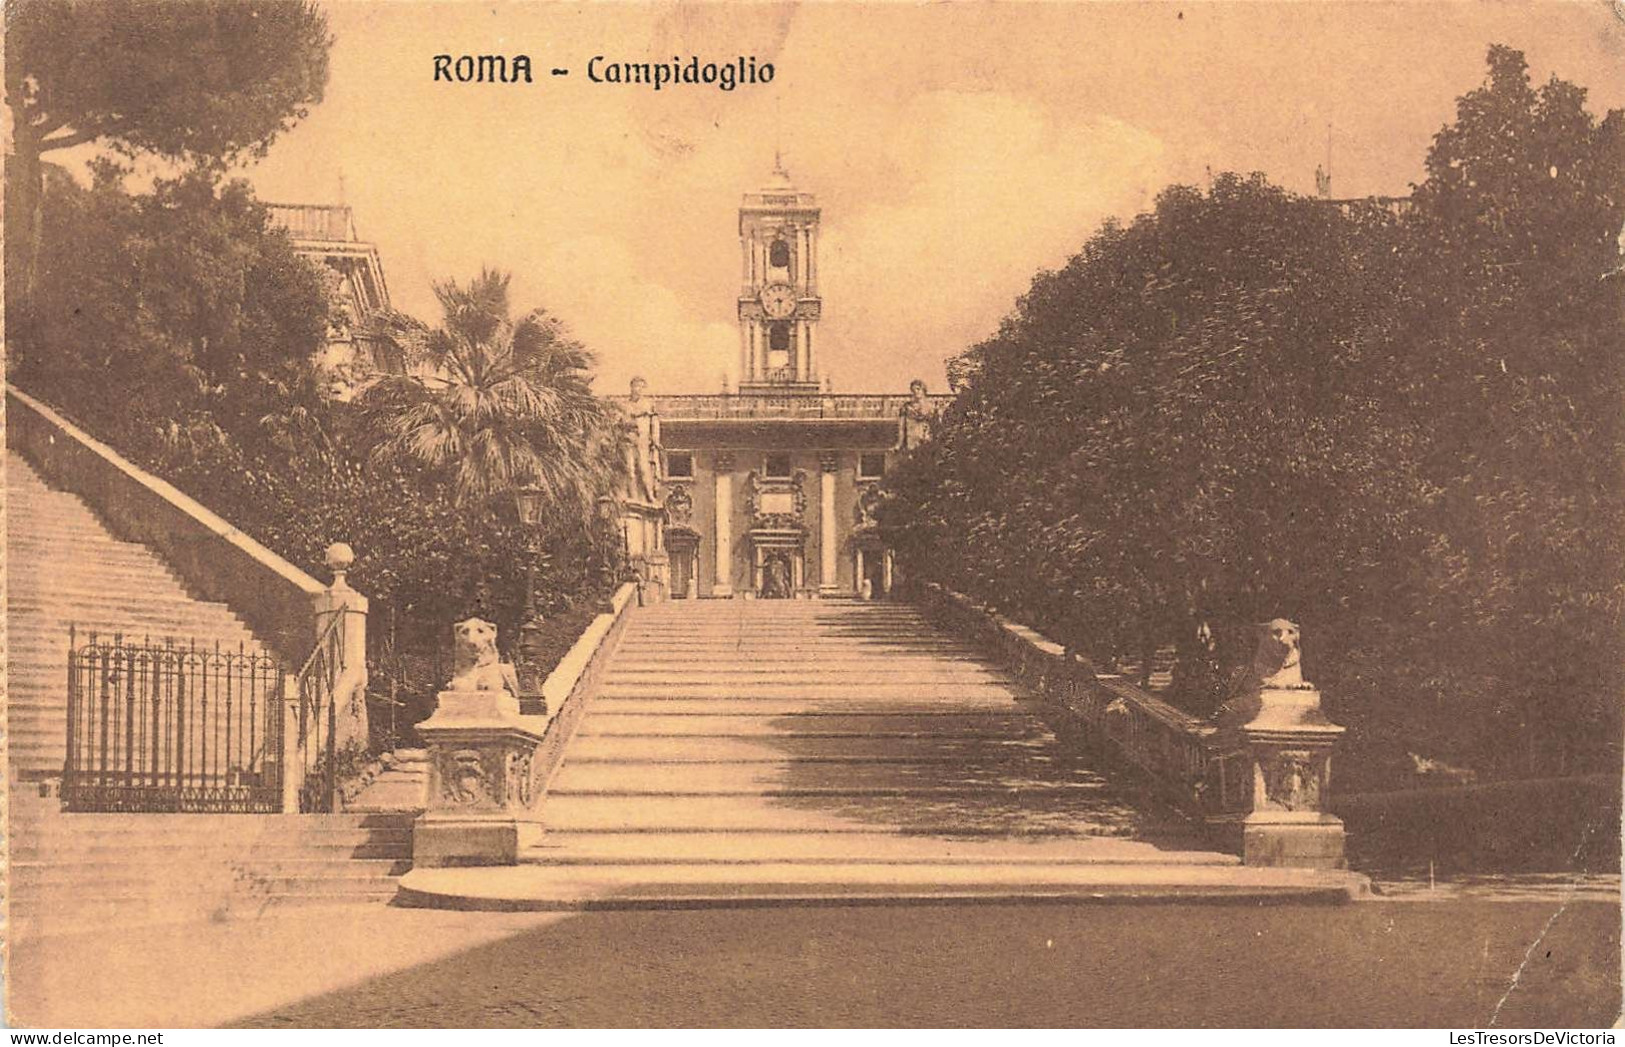 ITALIE - Rome - Campidoglio - Carte Postale Ancienne - Andere Monumente & Gebäude